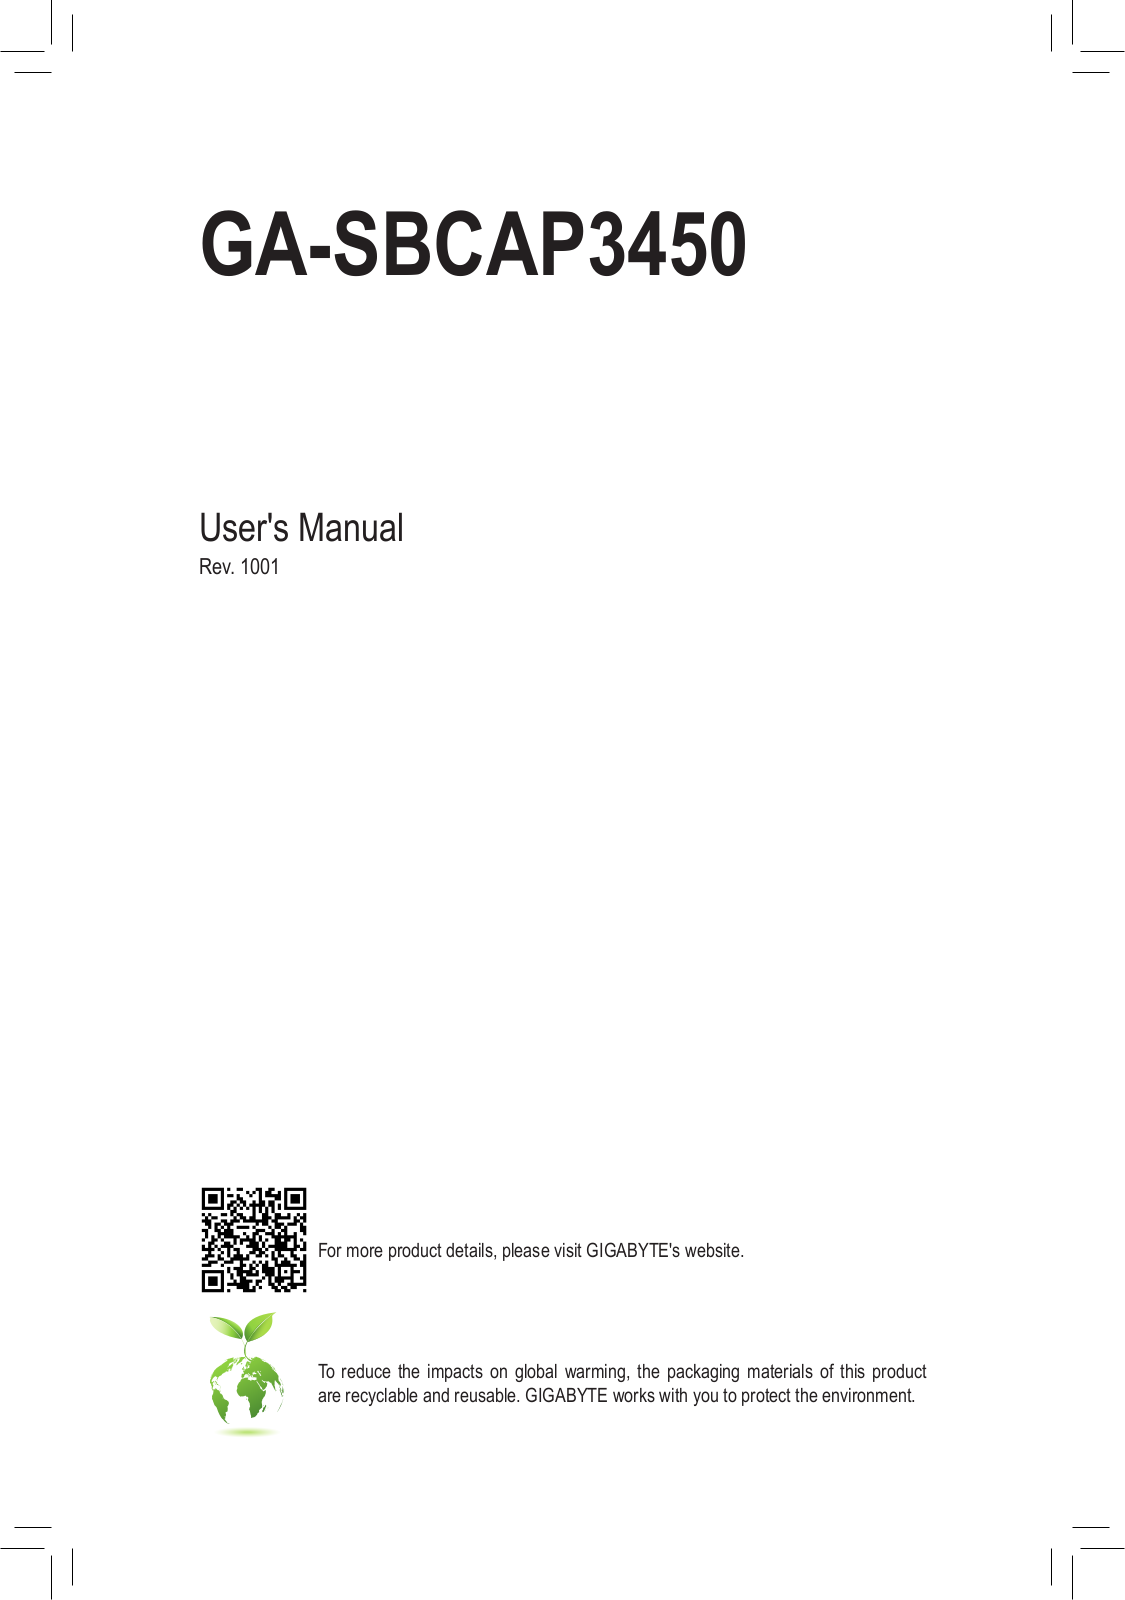 Gigabyte GA-SBCAP3450 User Manual